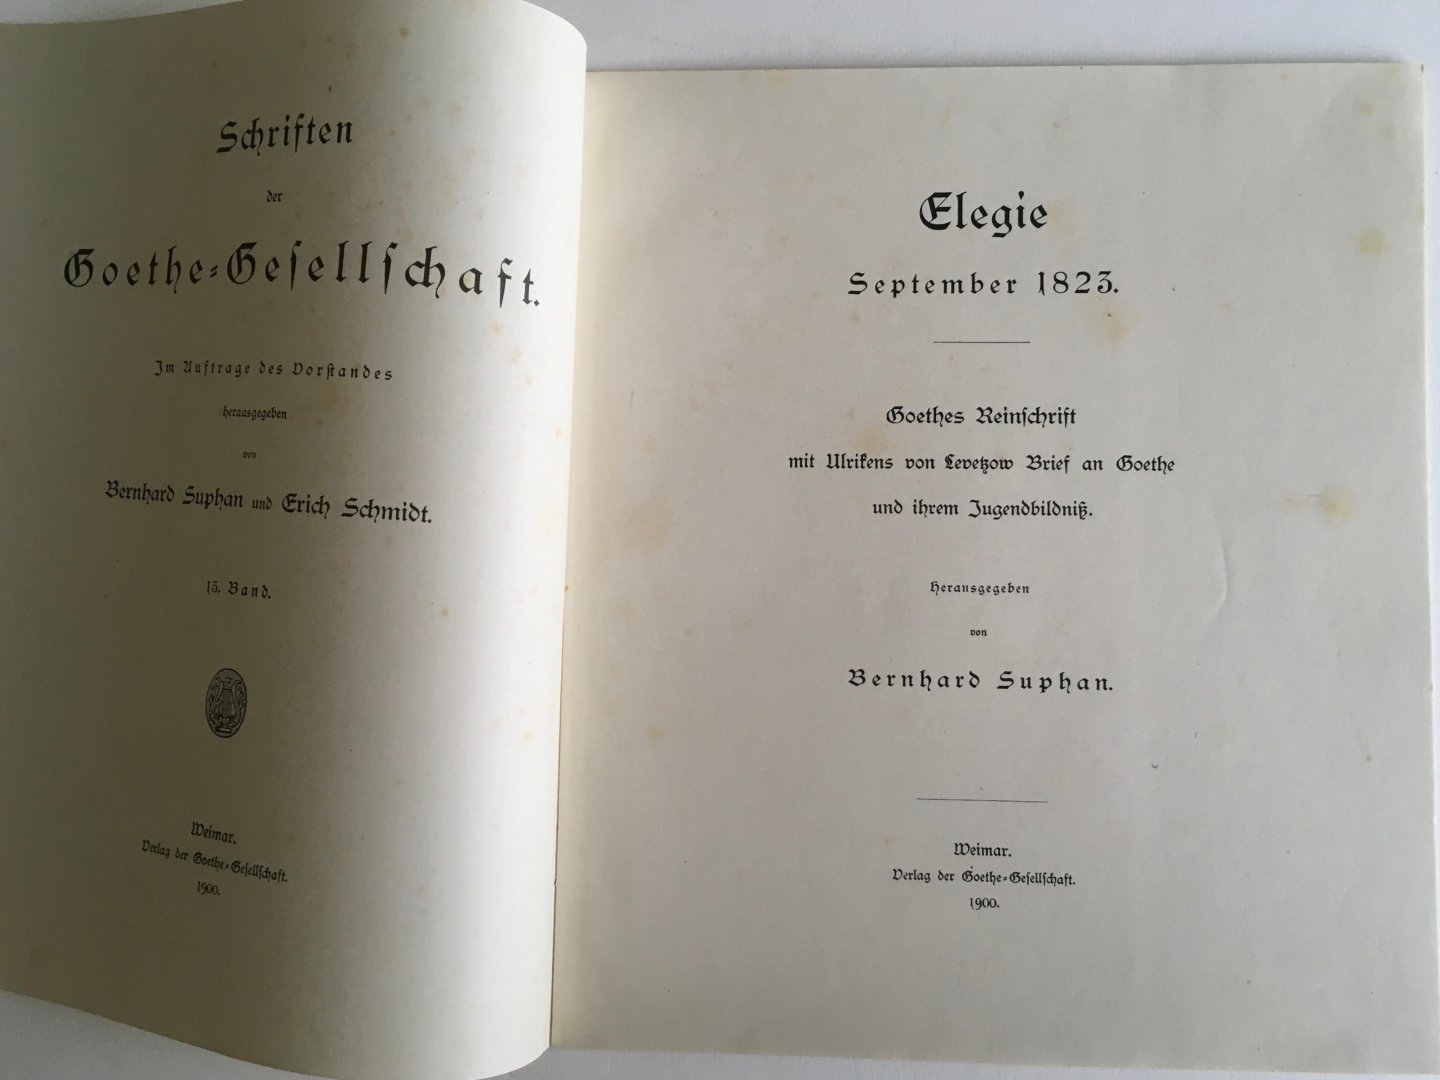 Suphan, Bernhard - Elegie September 1823.